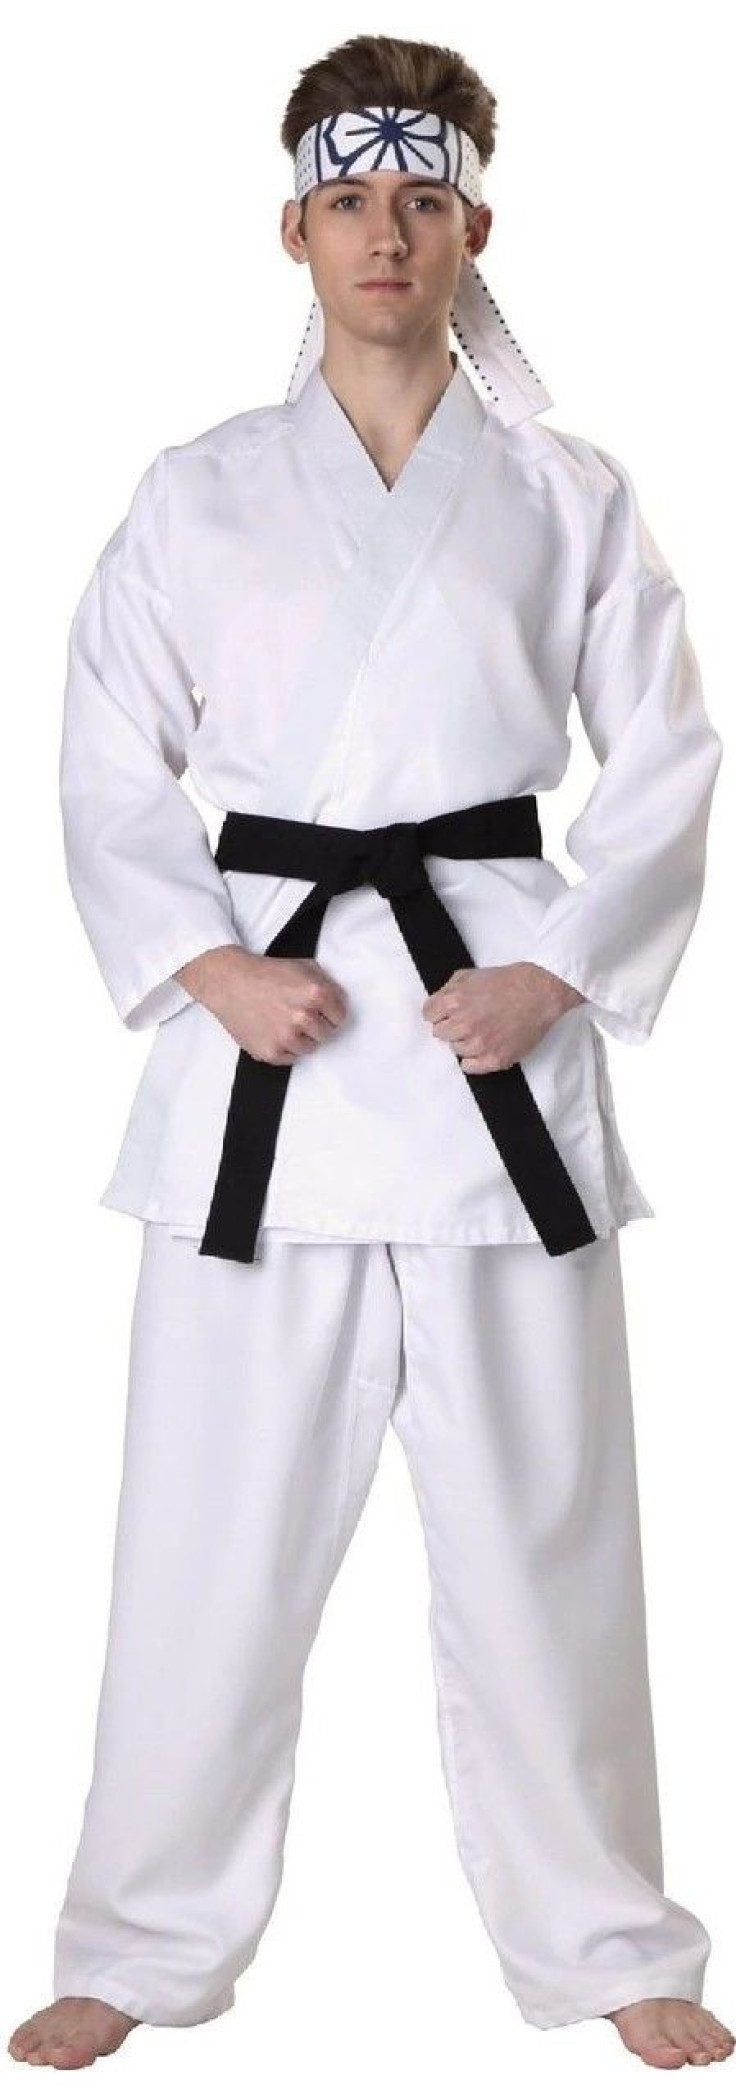 The Karate Kid Daniel LaRusso Costume